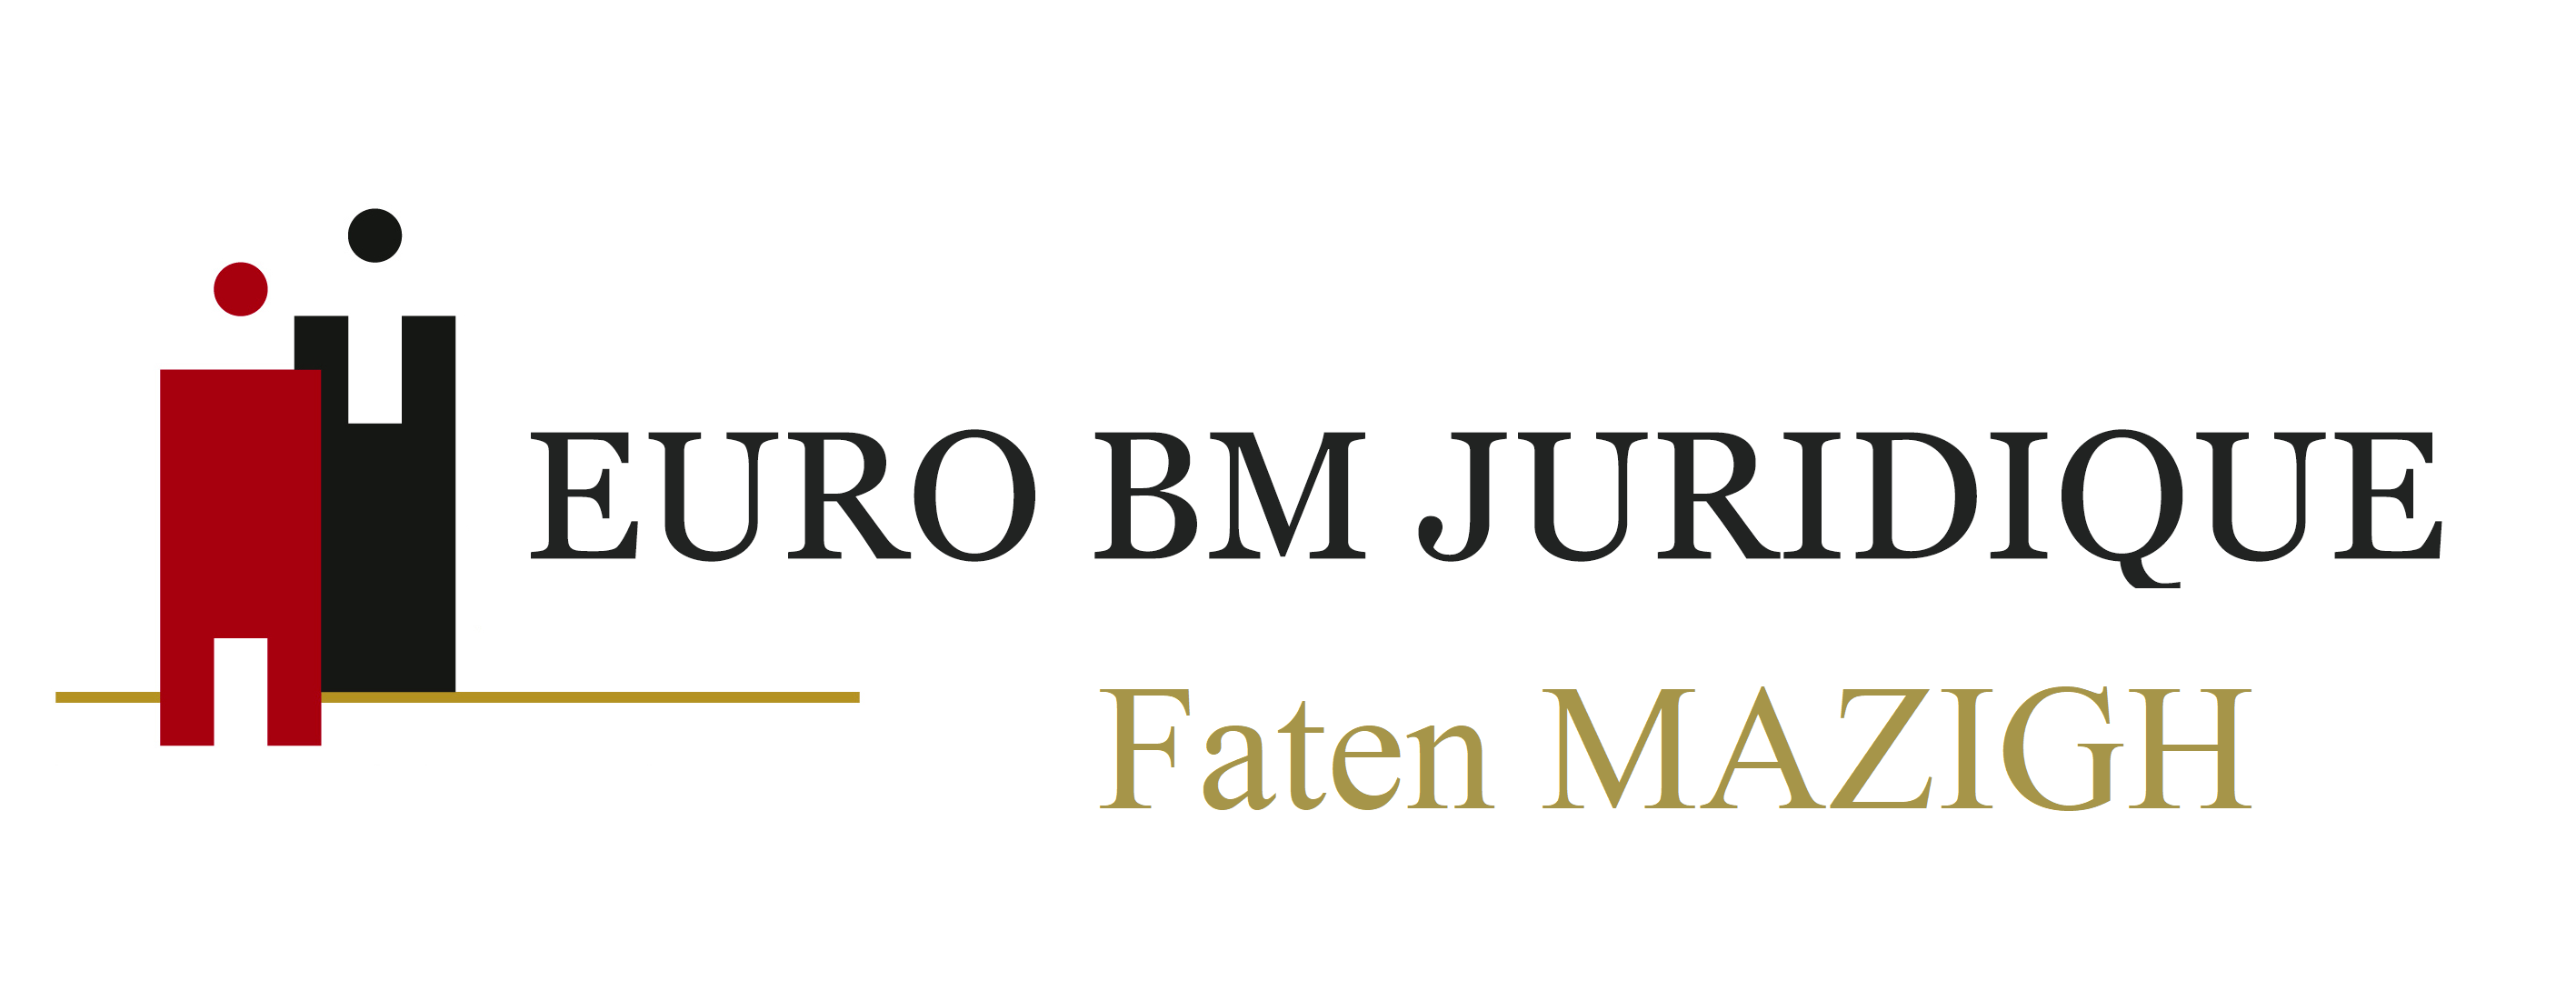 Euro BM Juridique